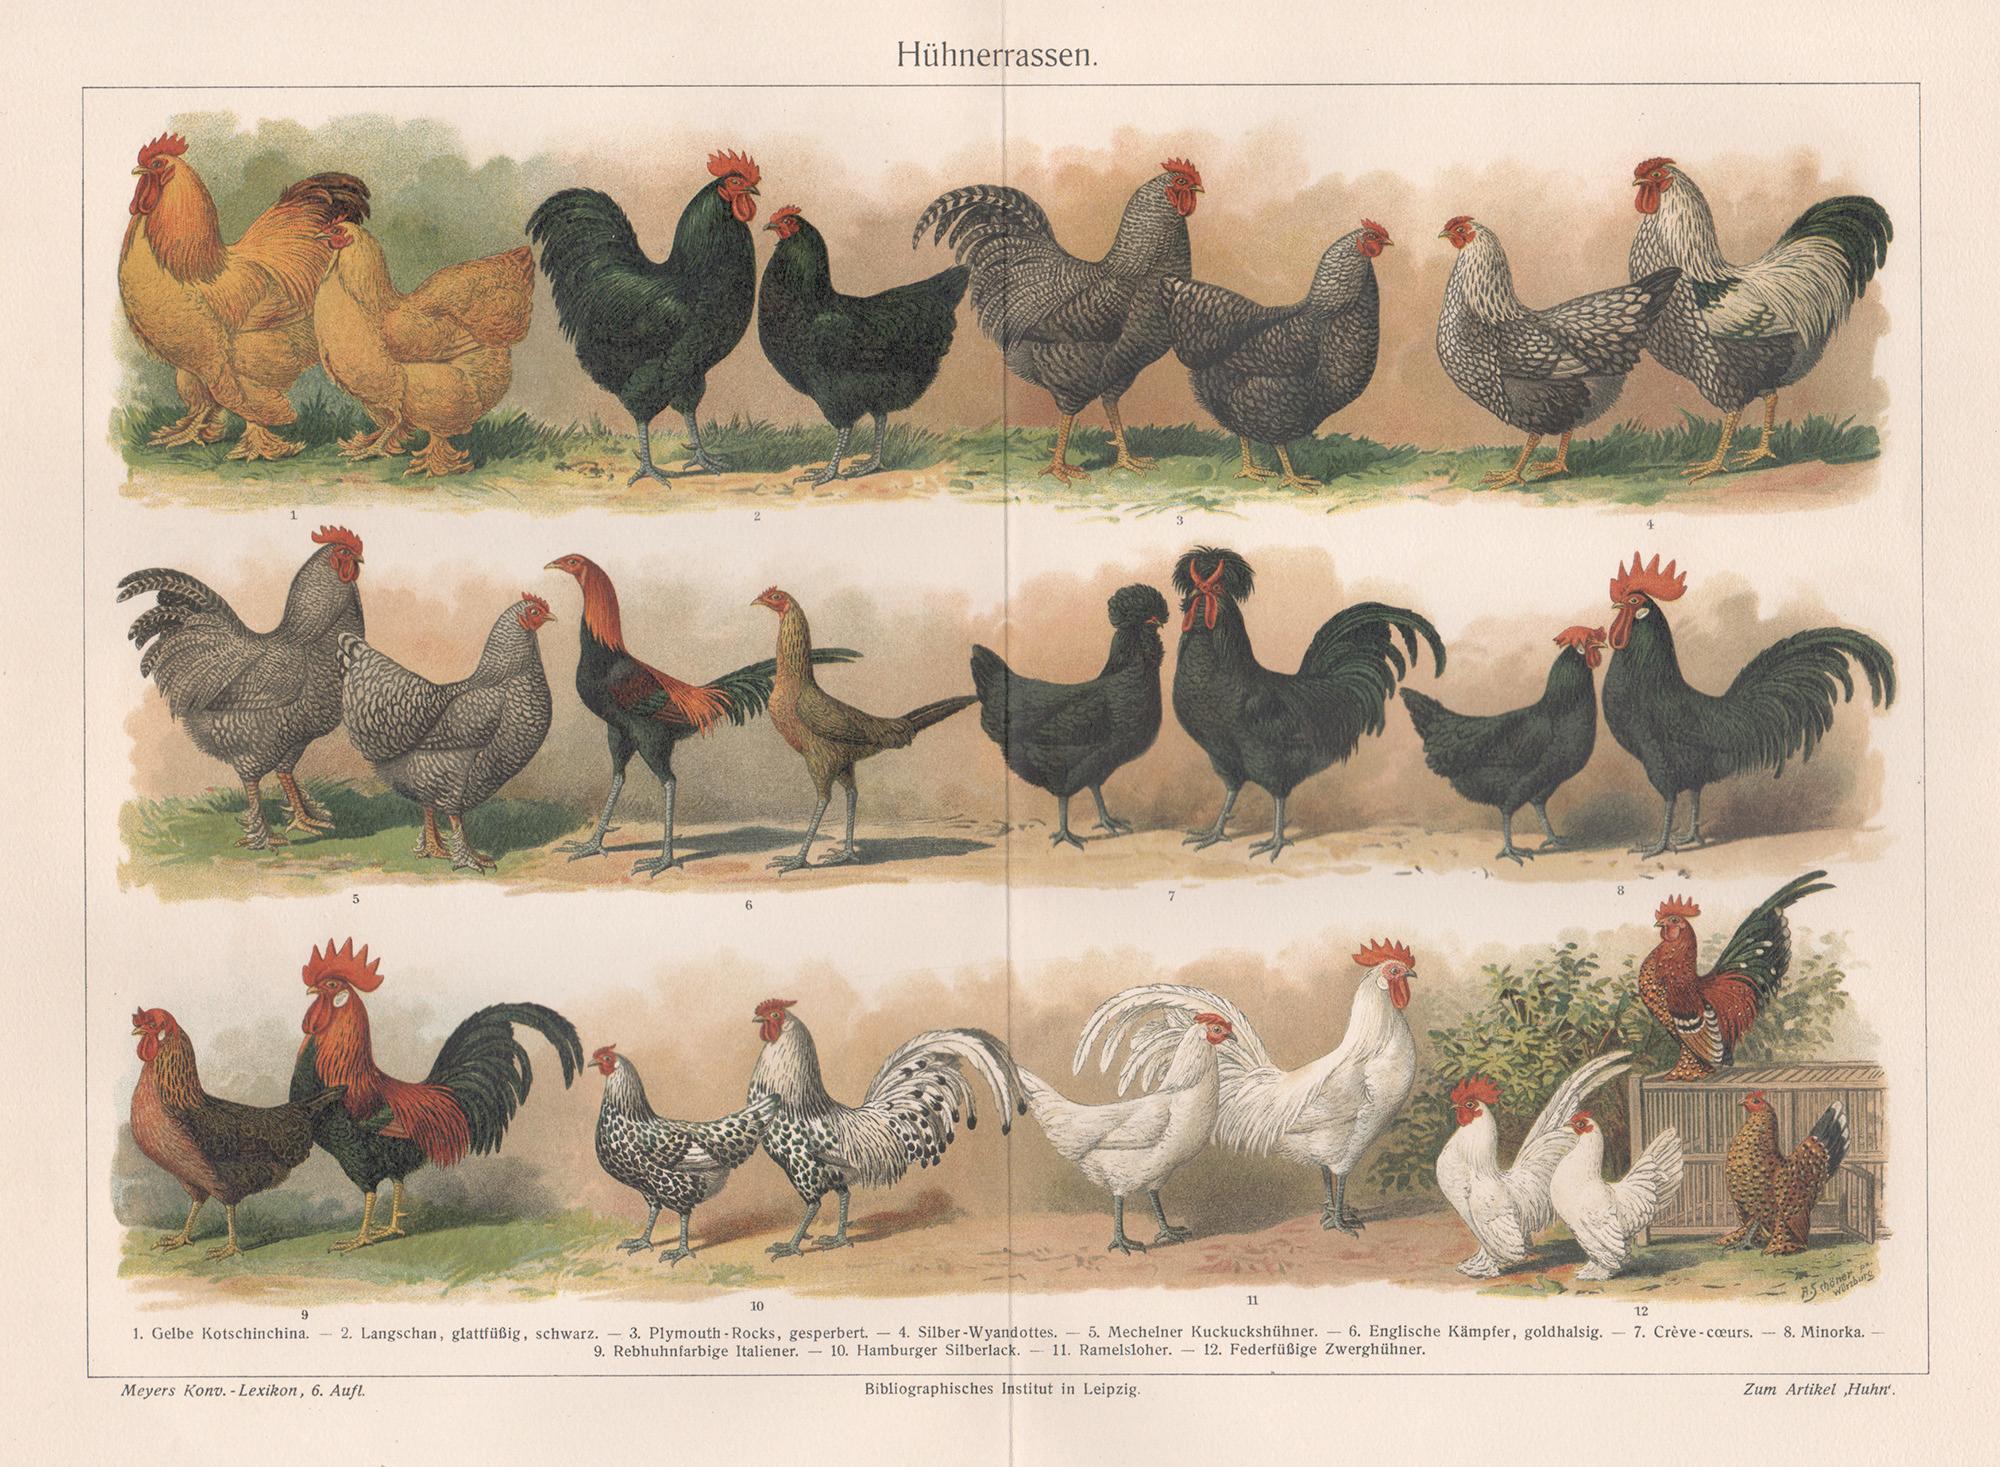 Huhnerrassen (Poultry Breeds), chromolithographie allemande ancienne d'oiseau poulet